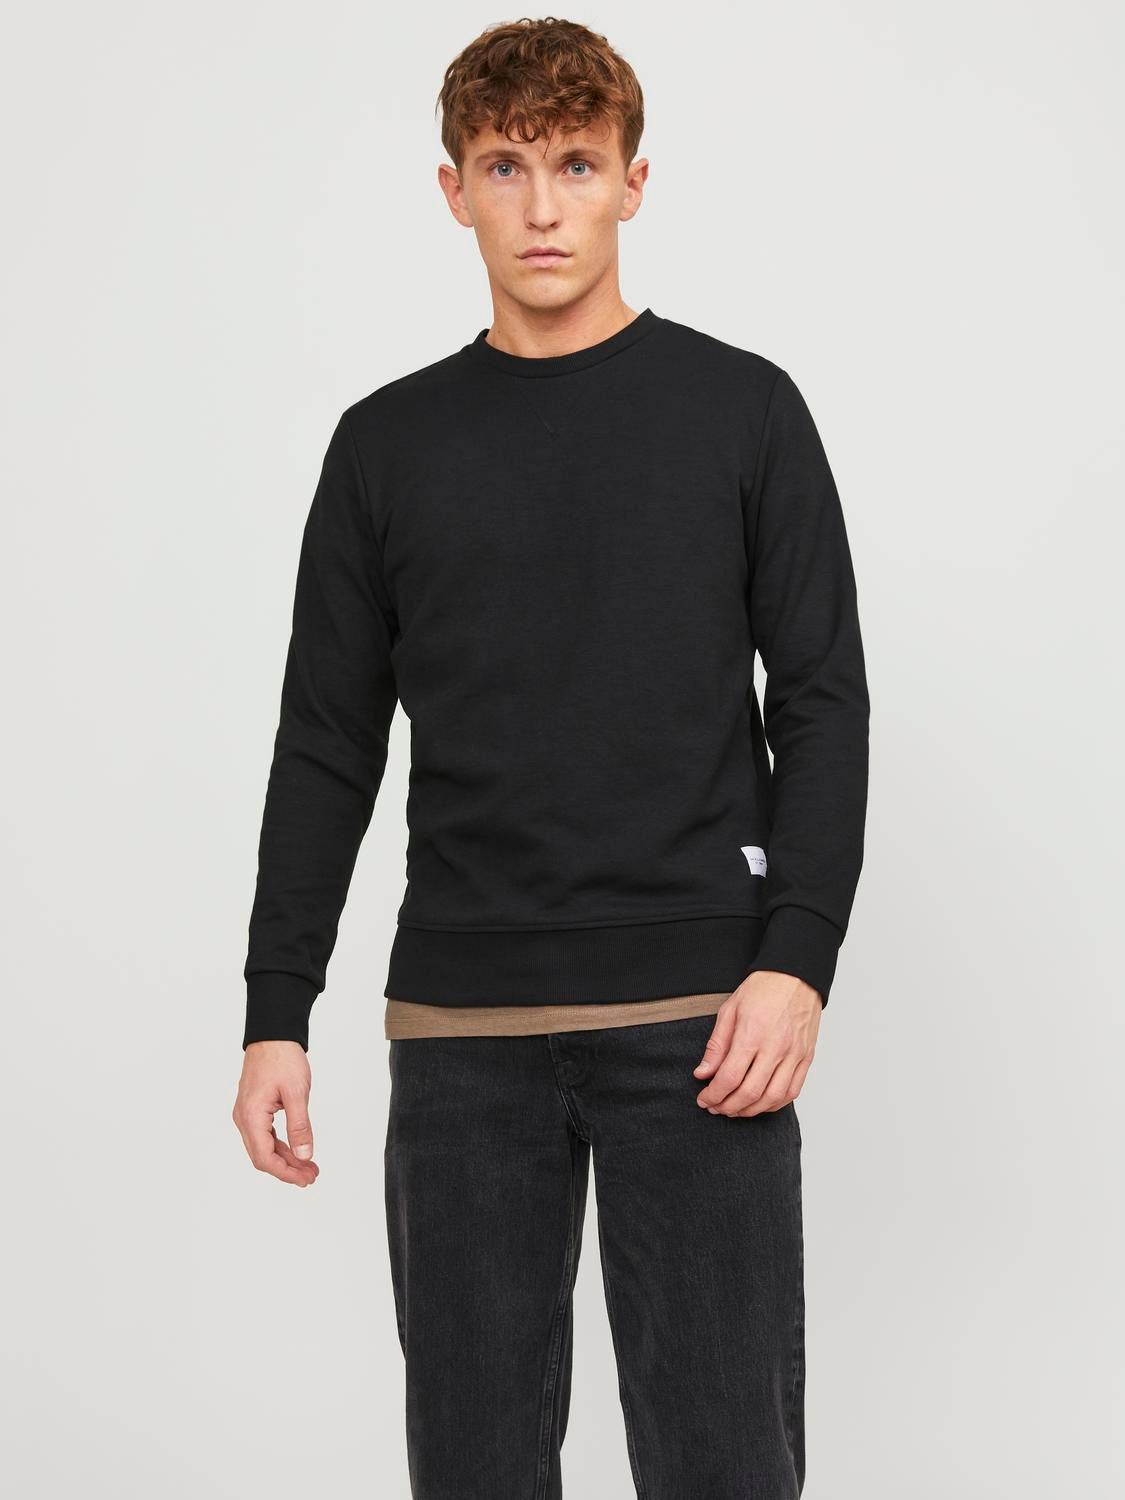 discount 56% Gray XL MEN FASHION Jumpers & Sweatshirts Elegant Jack & Jones jumper 